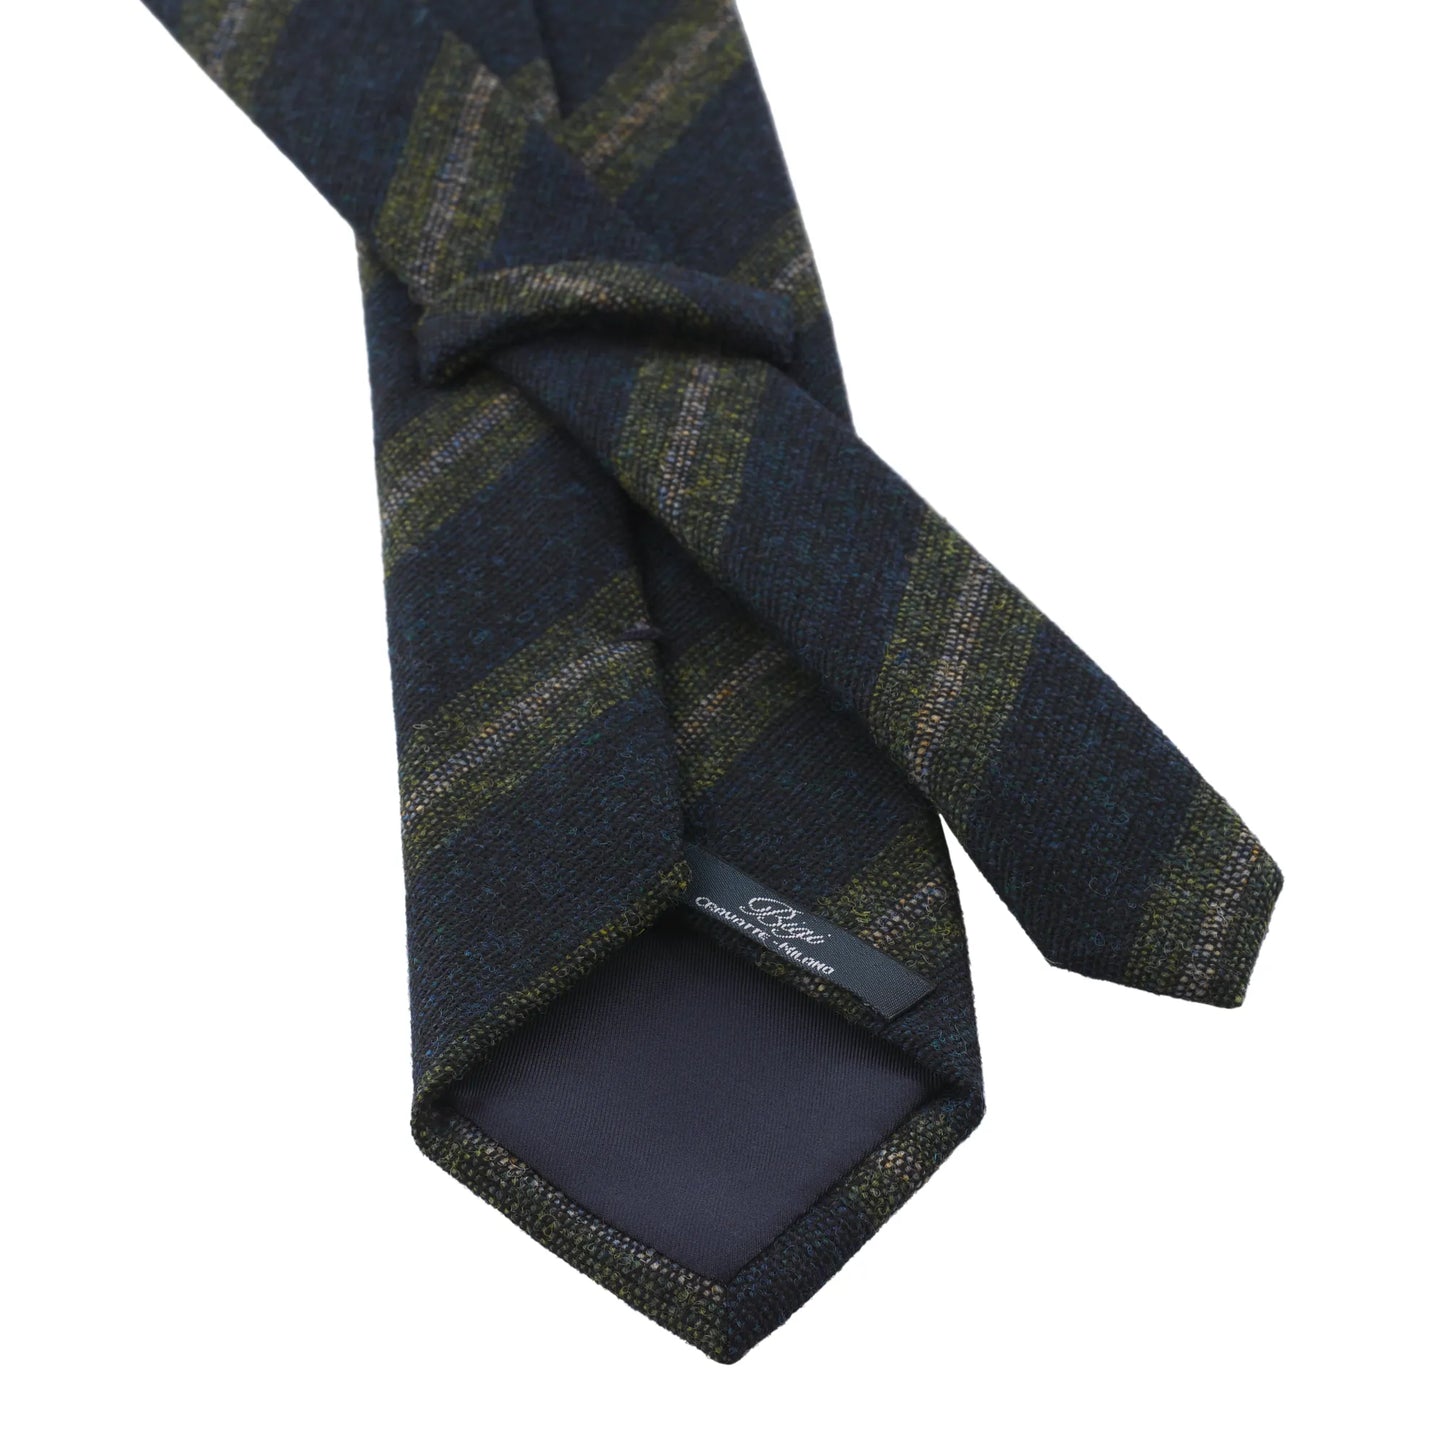 Regimental Woven Wool Tie in Green and Blue